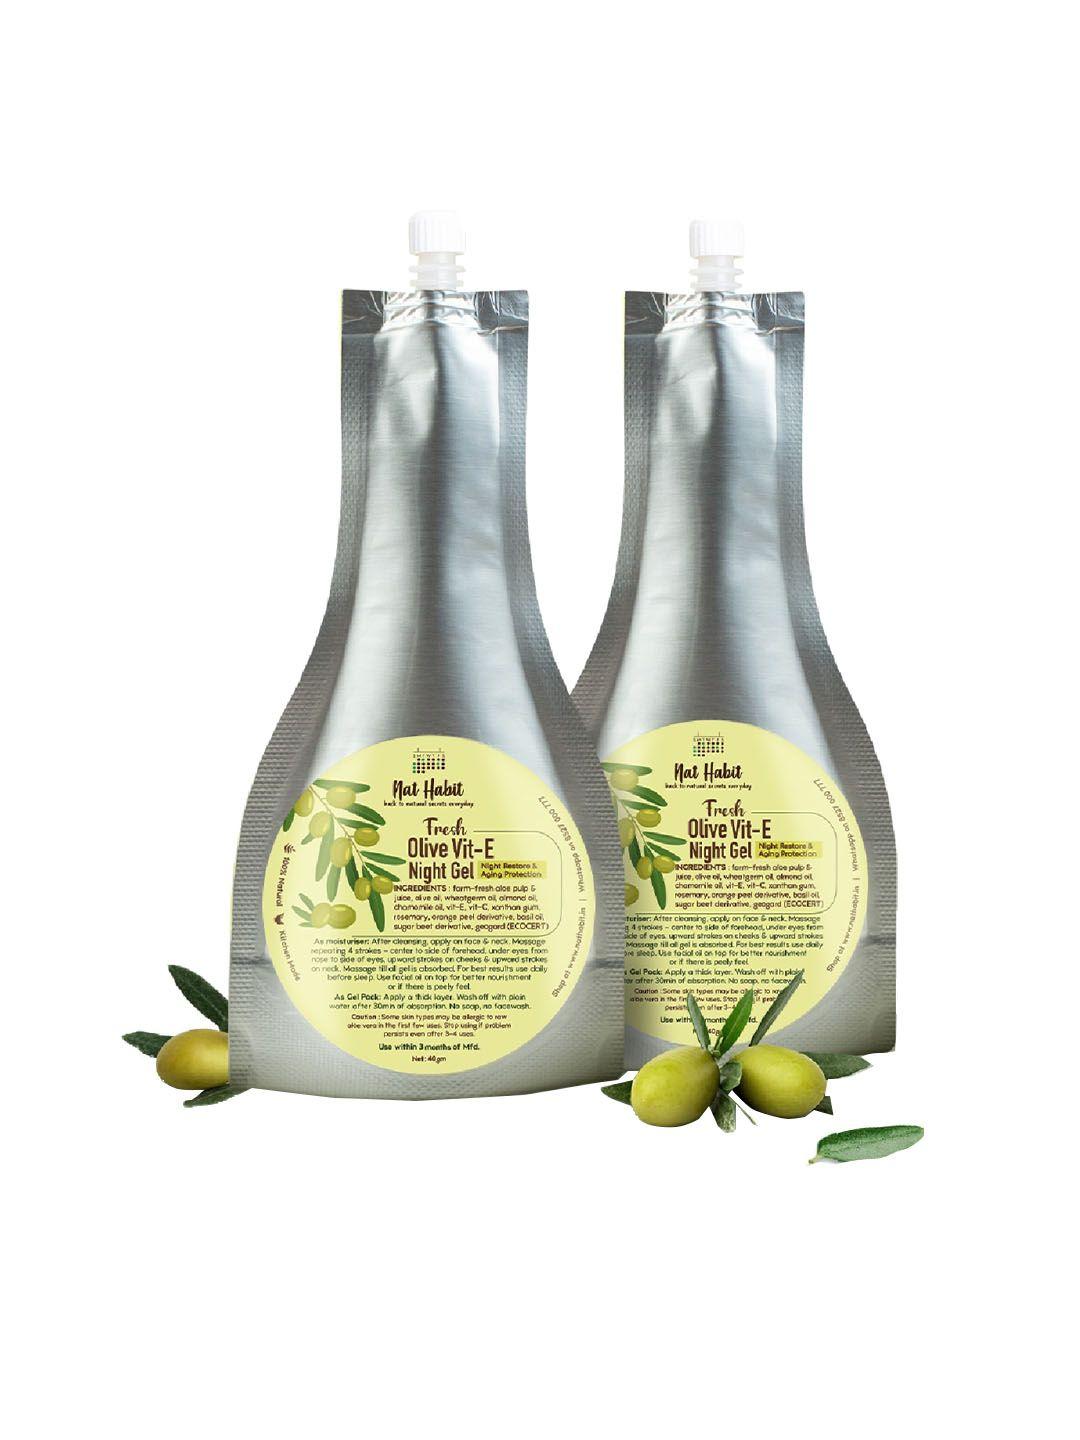 nat habit set of 2 fresh olive vit-e night gel for aging protection - 160g